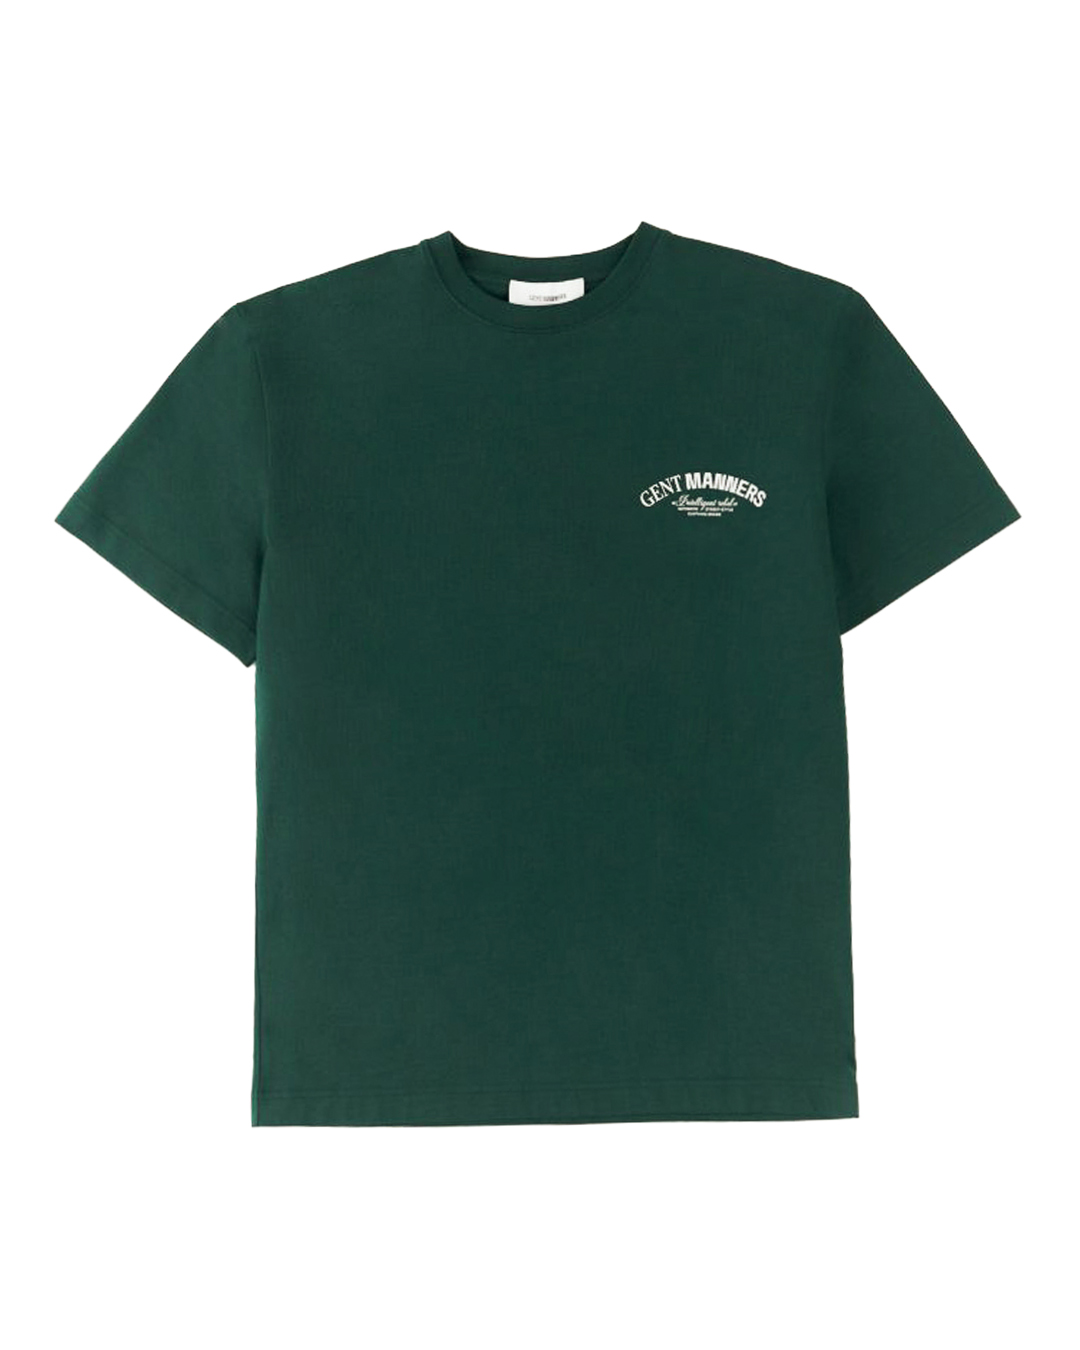 футболка Gent Manners 01_08T_GR зеленый 2xl, размер 2xl - фото 1